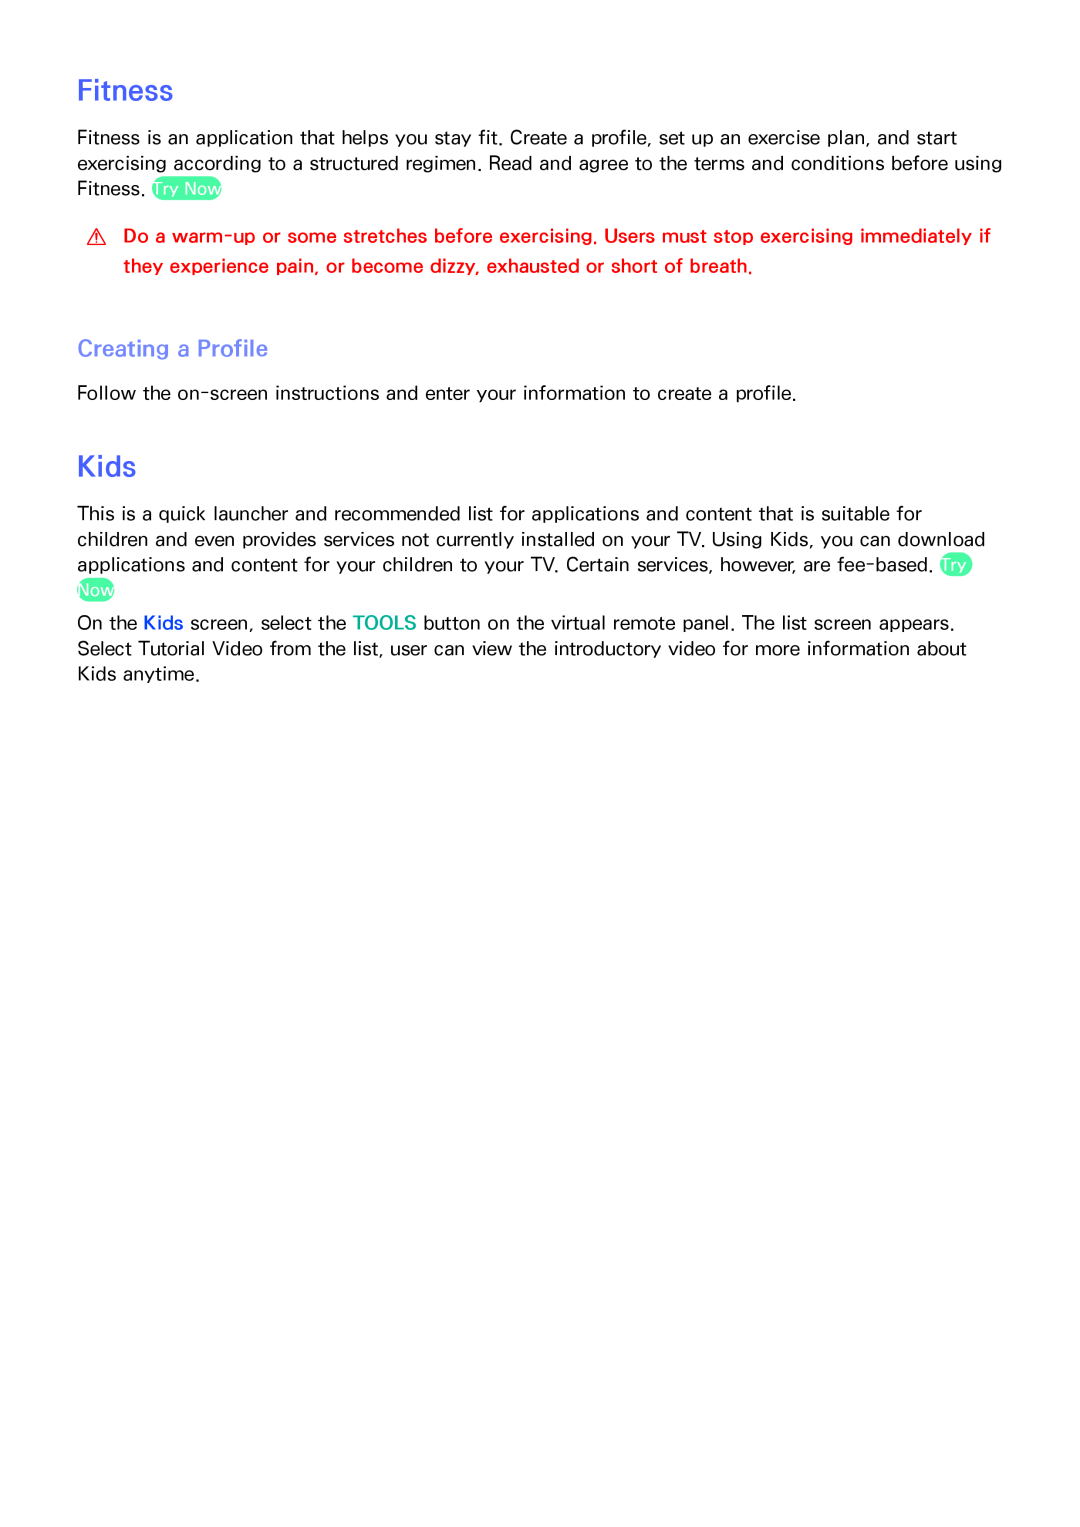 Samsung SEK-1000 manual Fitness, Kids, Creating a Profile 